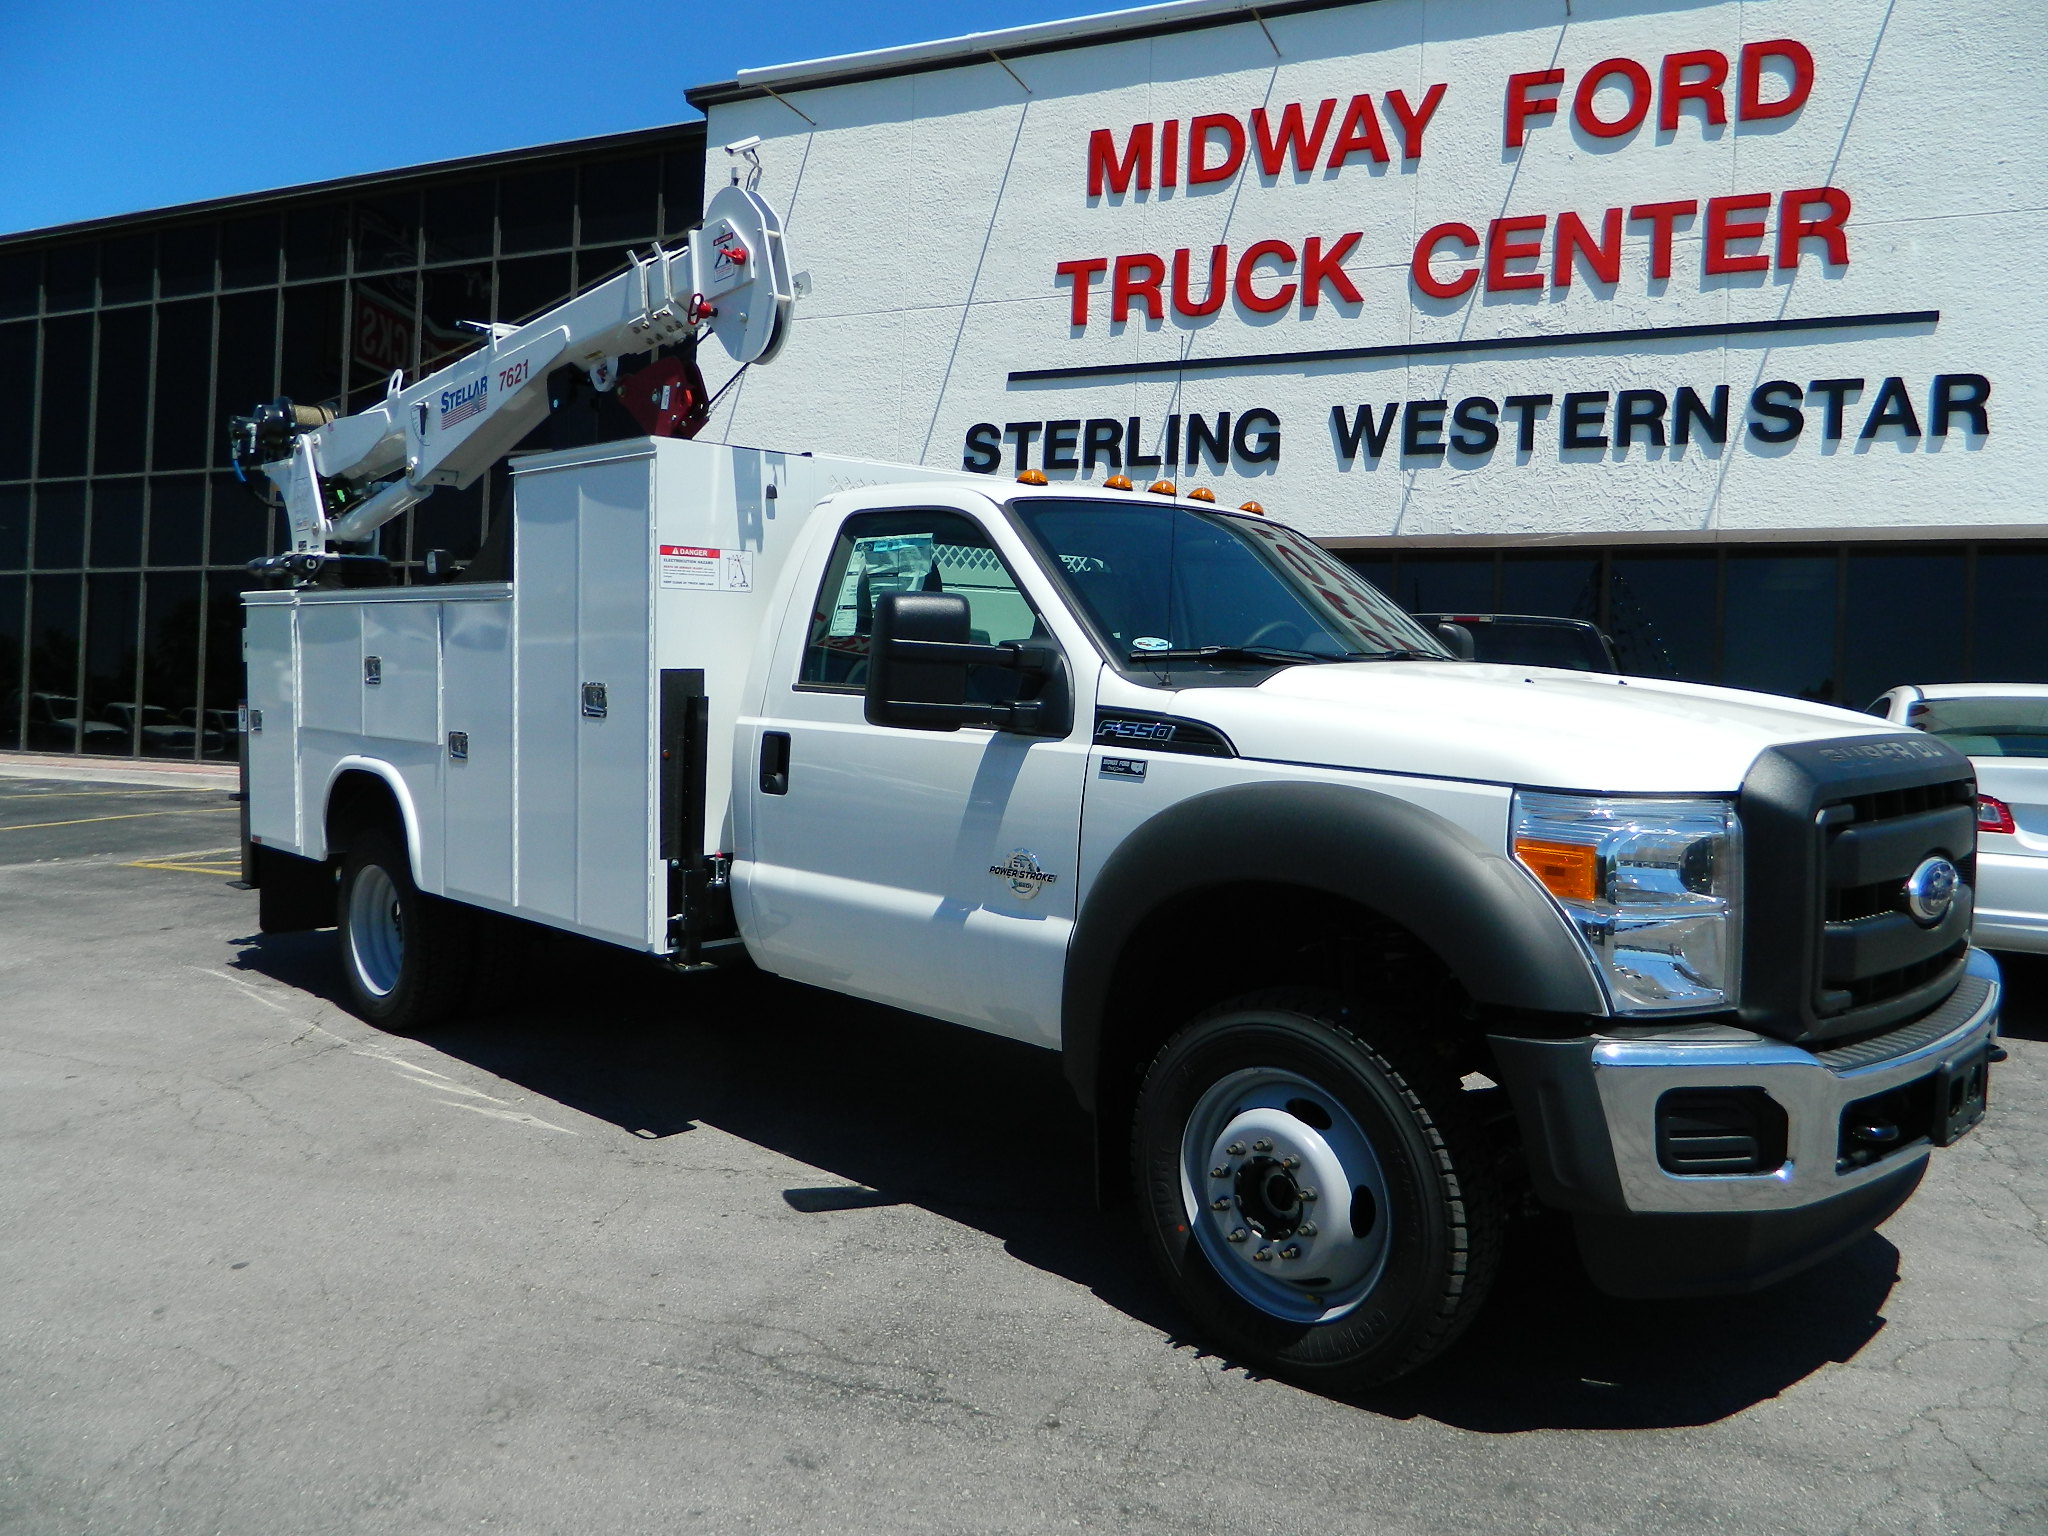 Midway ford truck center kansas city #1